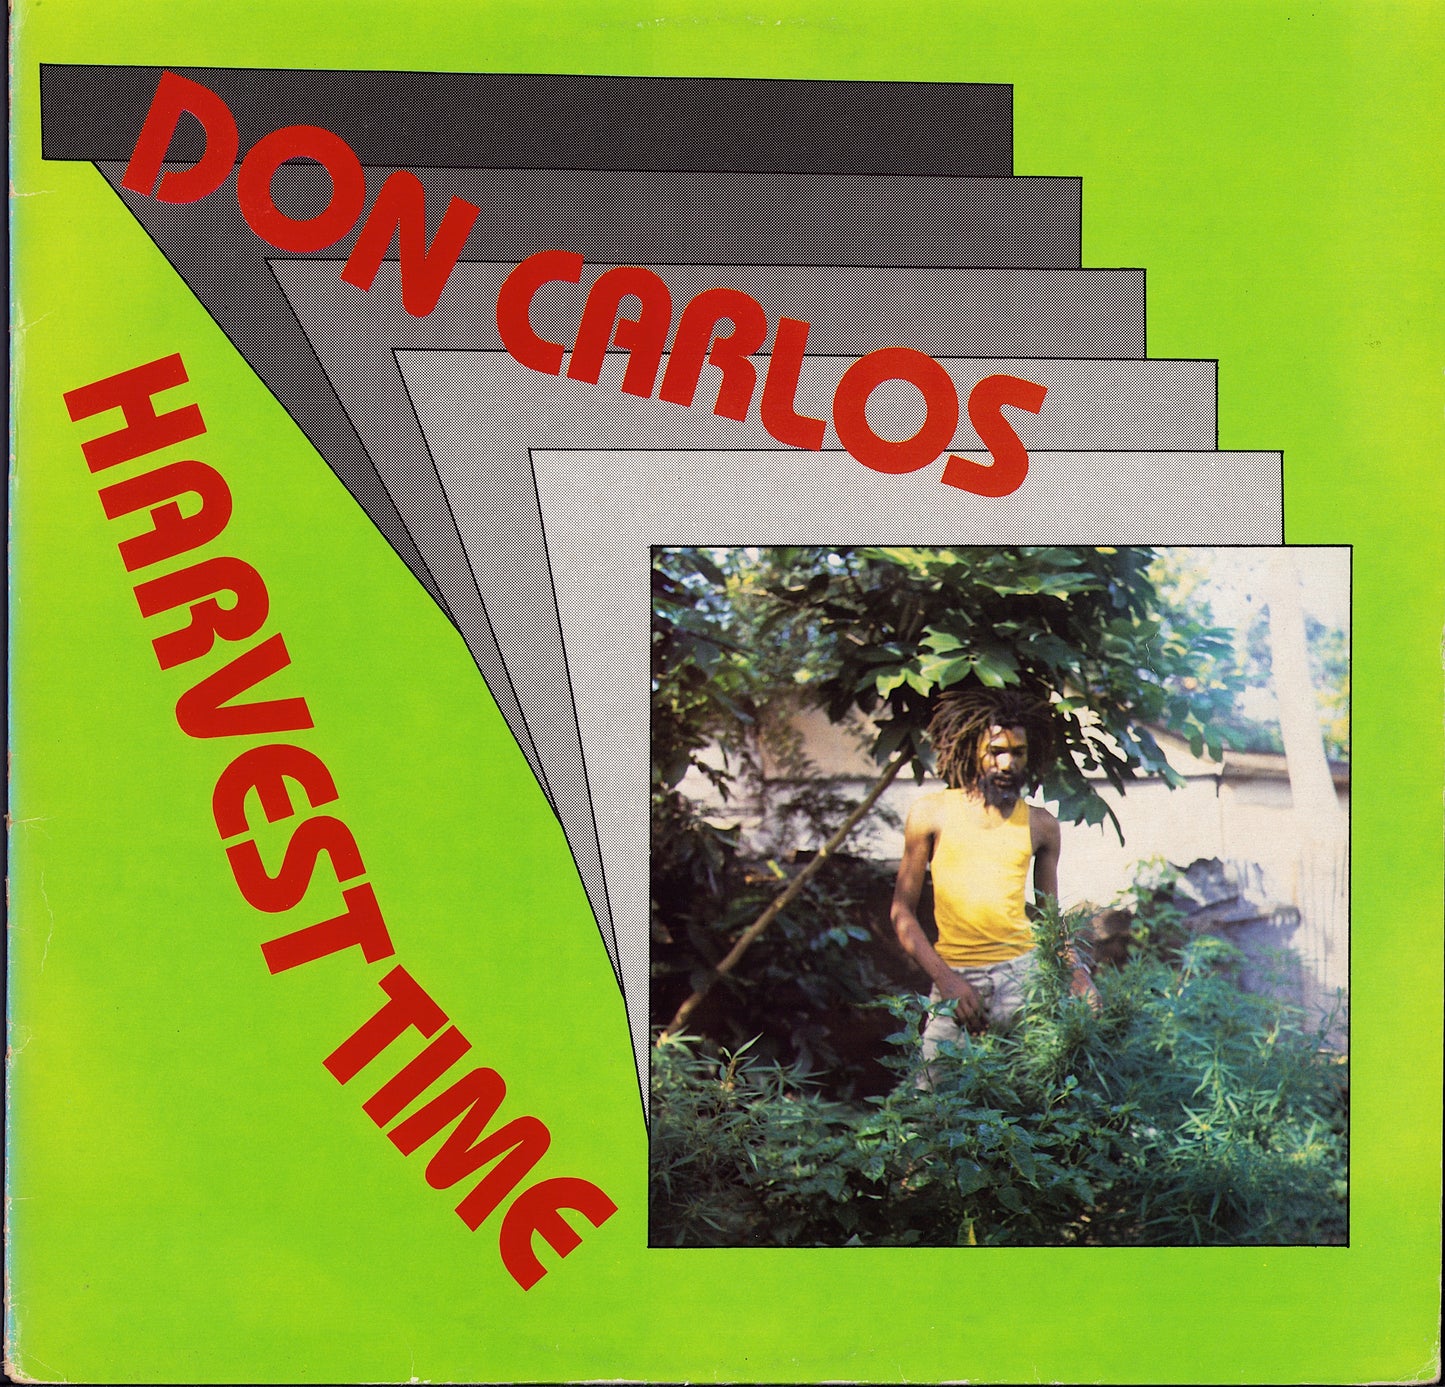 Don Carlos ‎- Harvest Time (Vinyl LP) UK